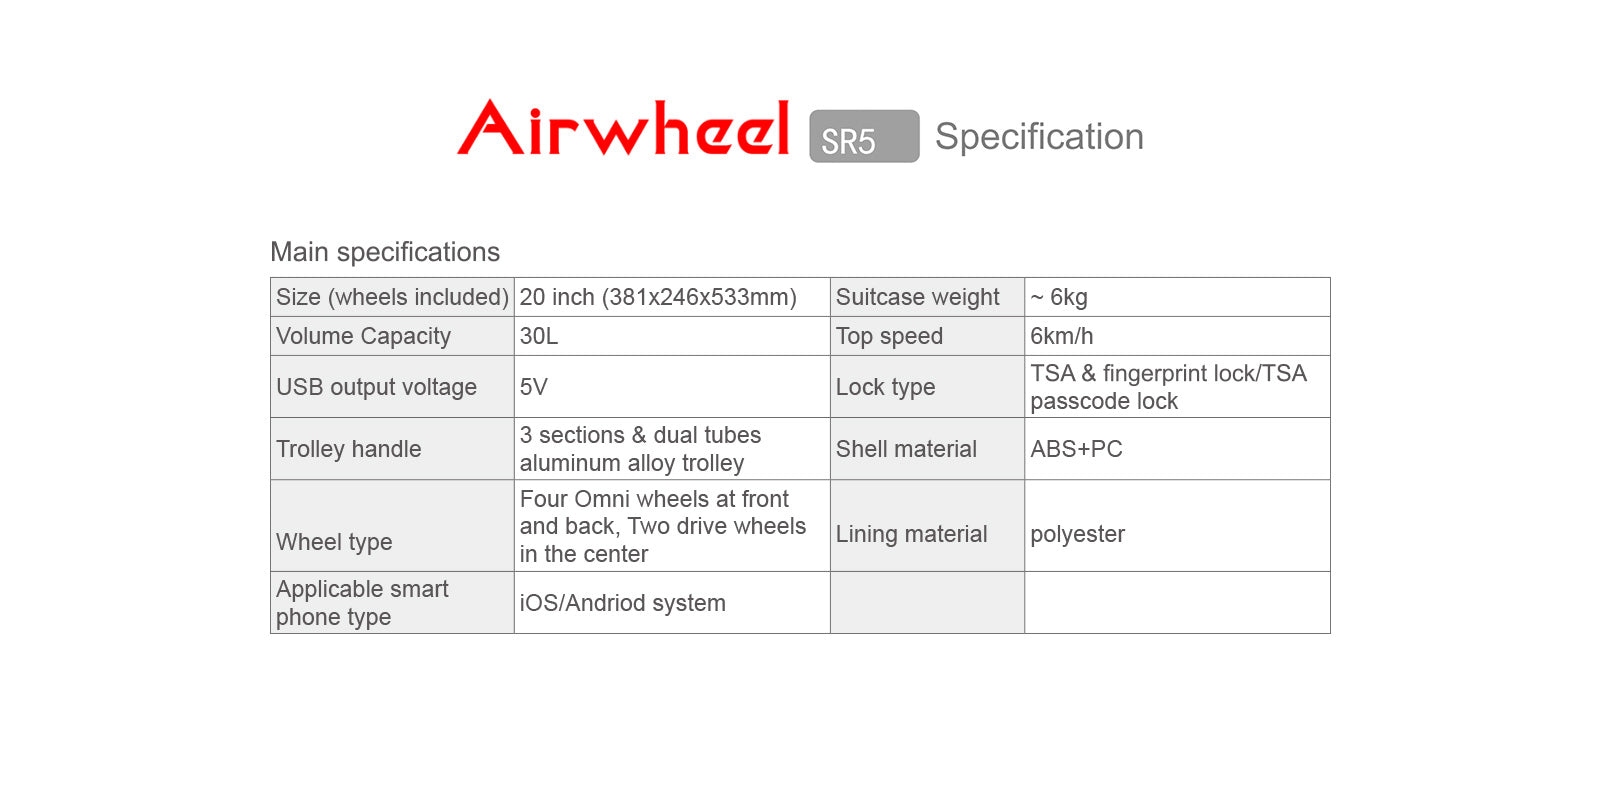 Airwheel-SR5-Automatic-Following-Suitcase-Specification-Sheet-Desktop-021